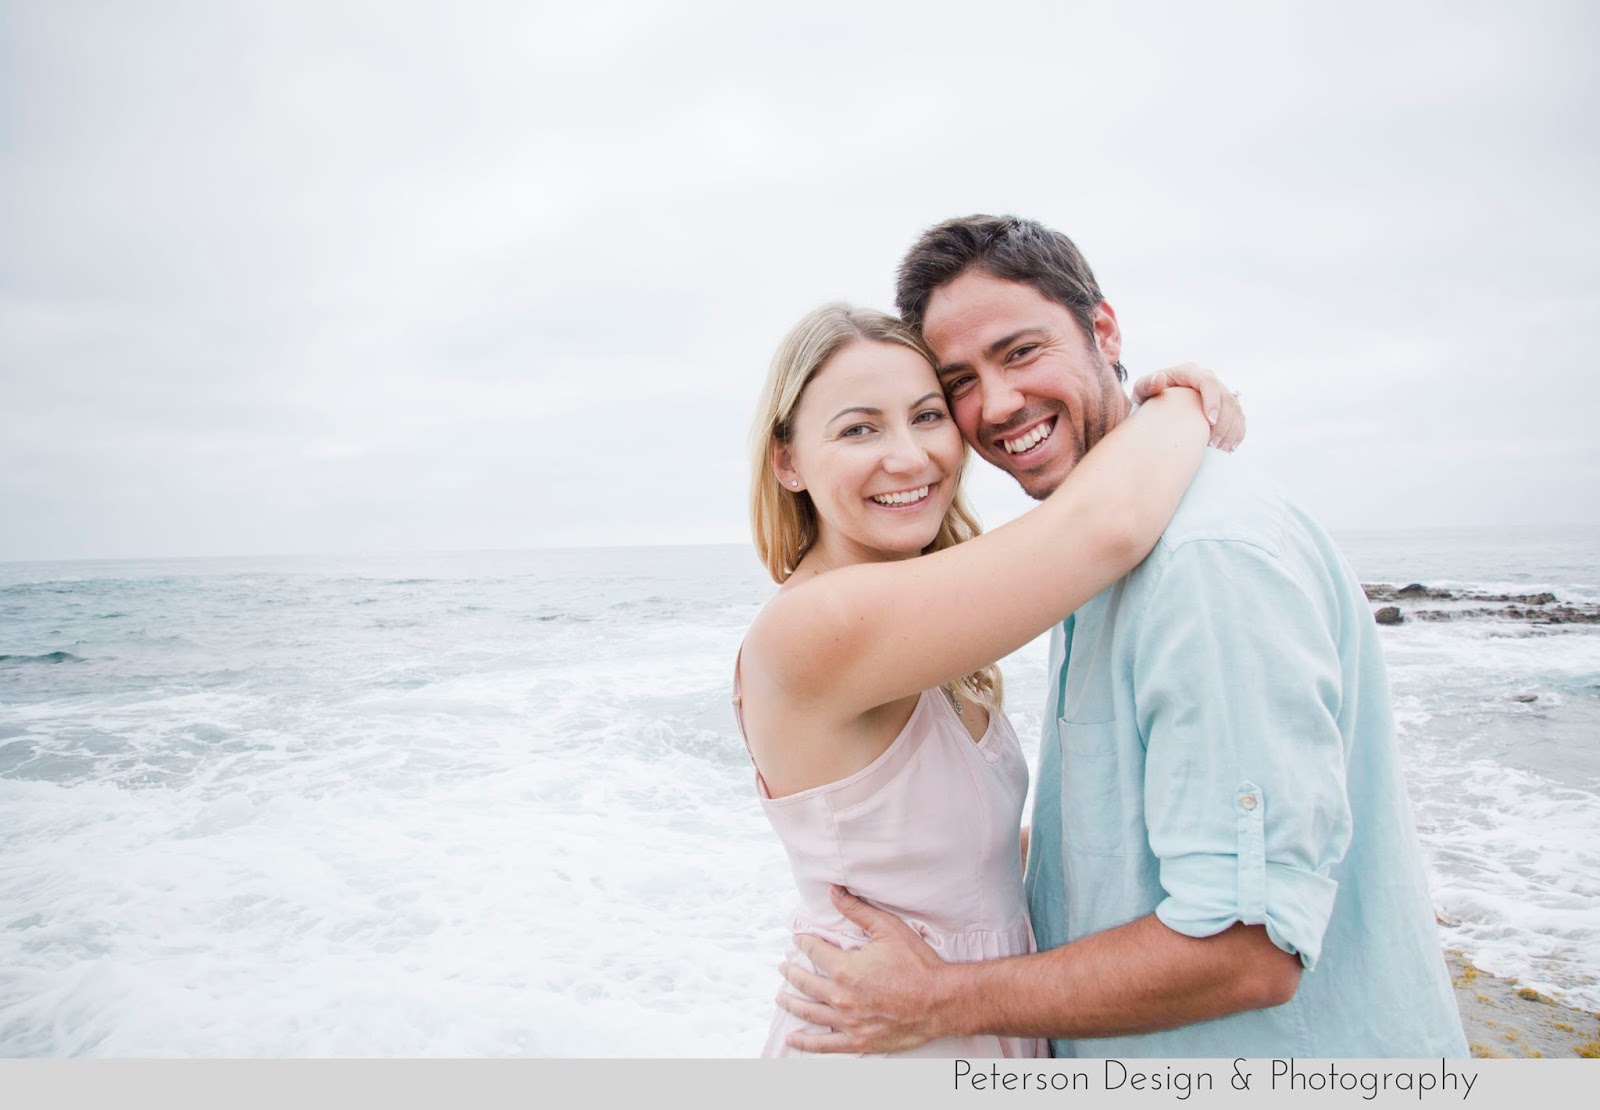 Shaina & Aaron :::: Engagement Session in Laguna Beach